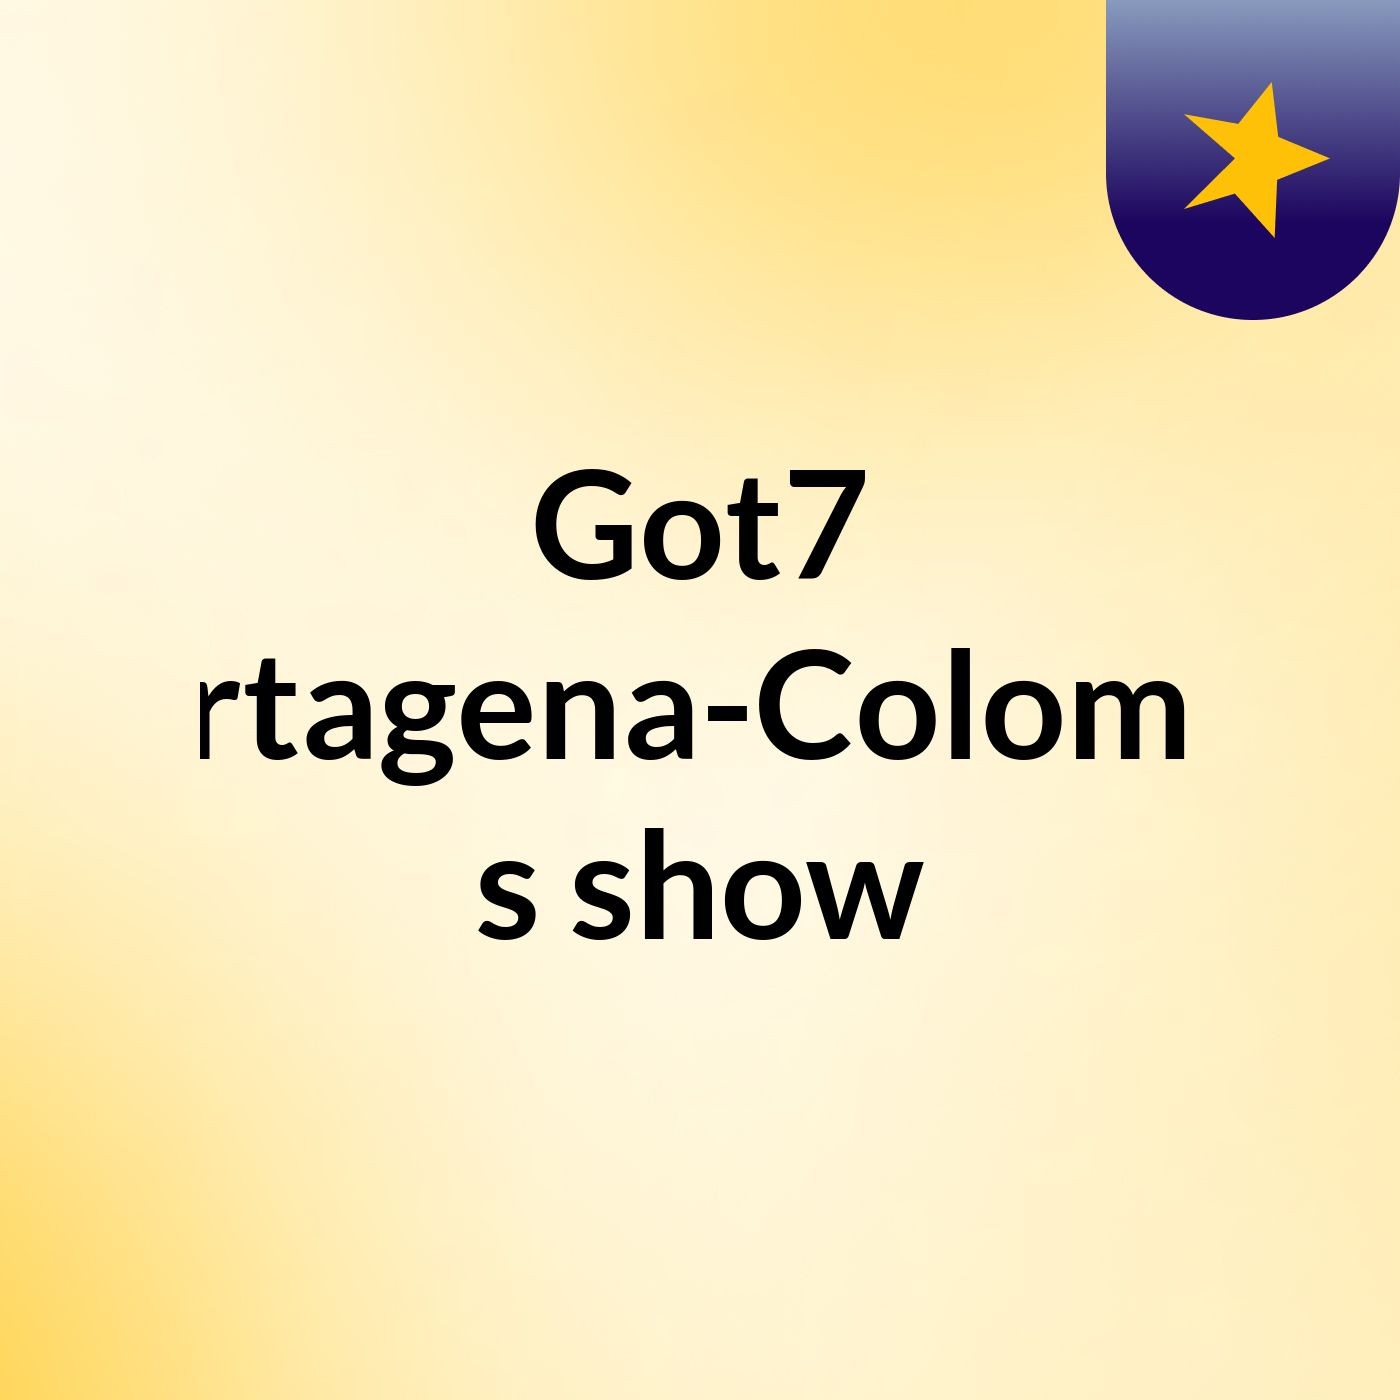 Got7 Cartagena-Colombia's show